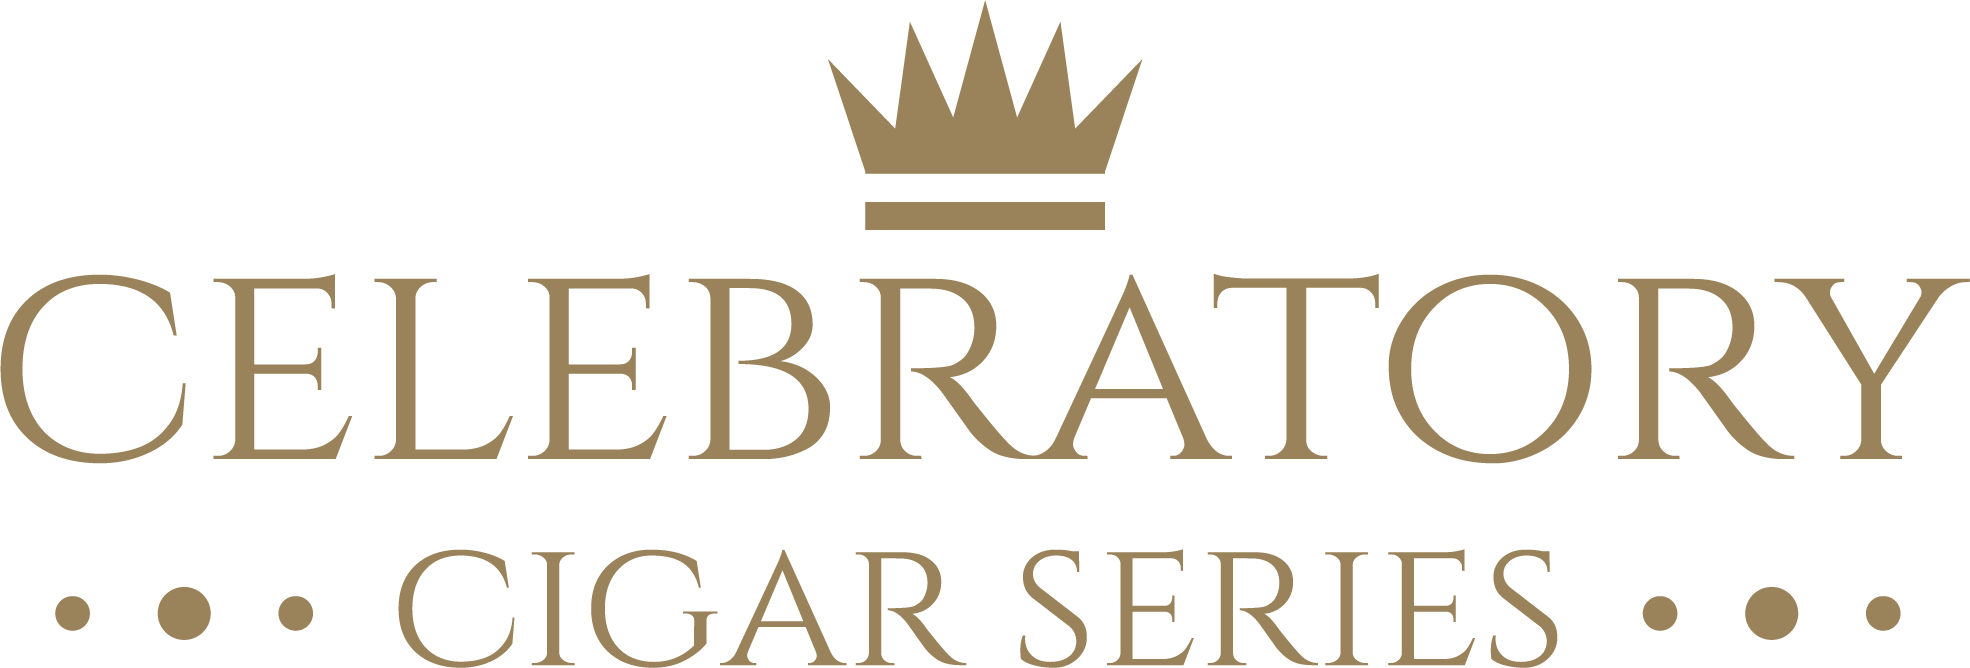 Best Cigars for Golf | Ultra-Premium Golf Cigars - Greenside Cigars